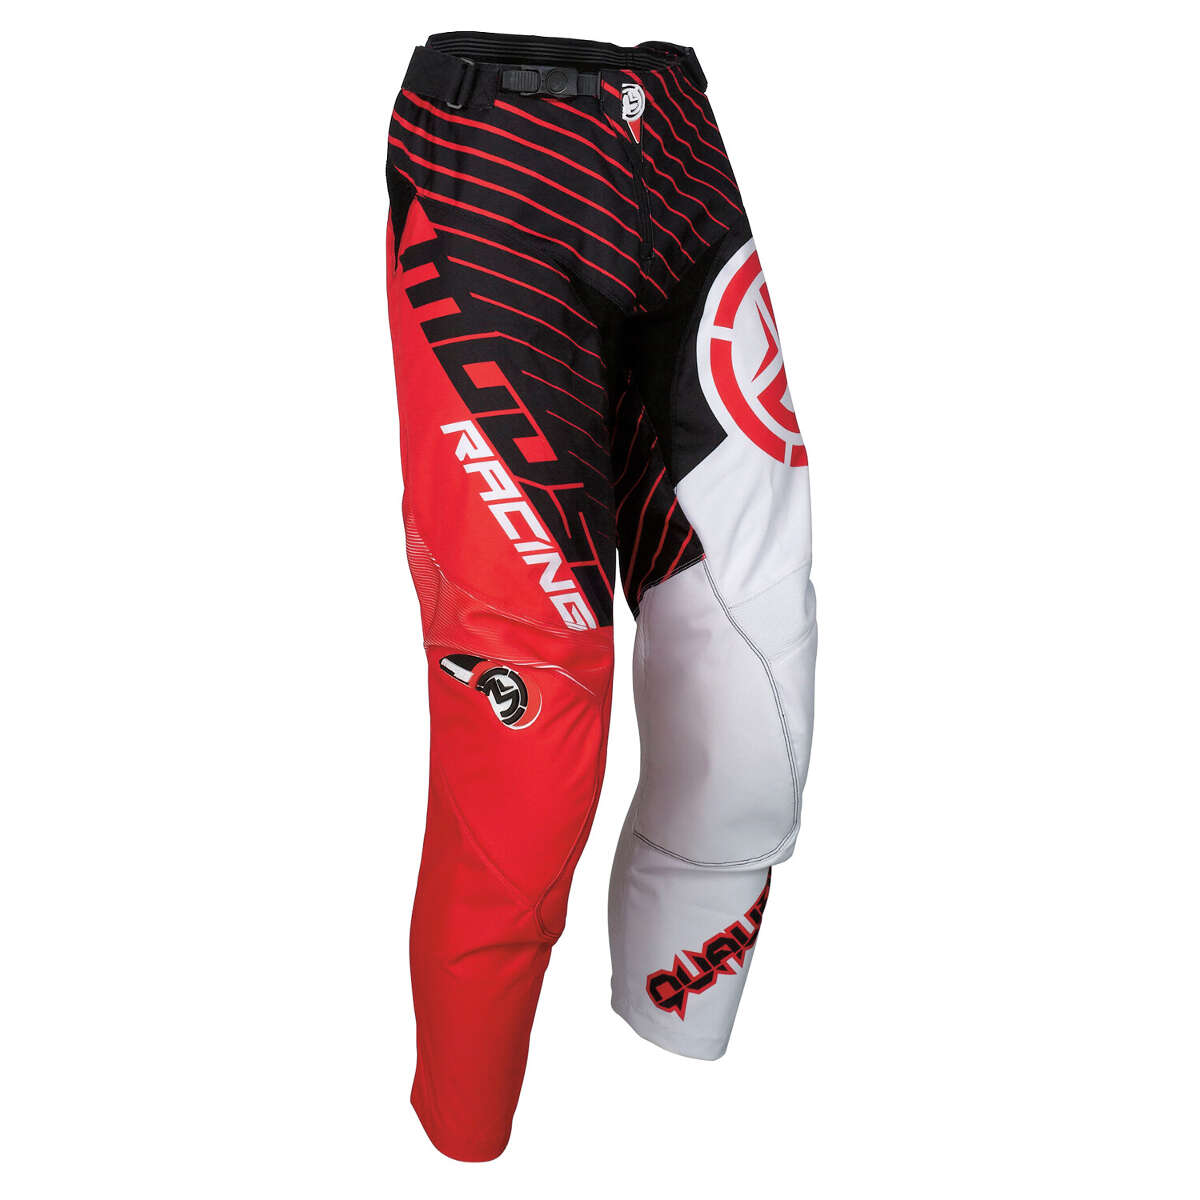 Moose Racing MX Pants Qualifier Black/Red/White